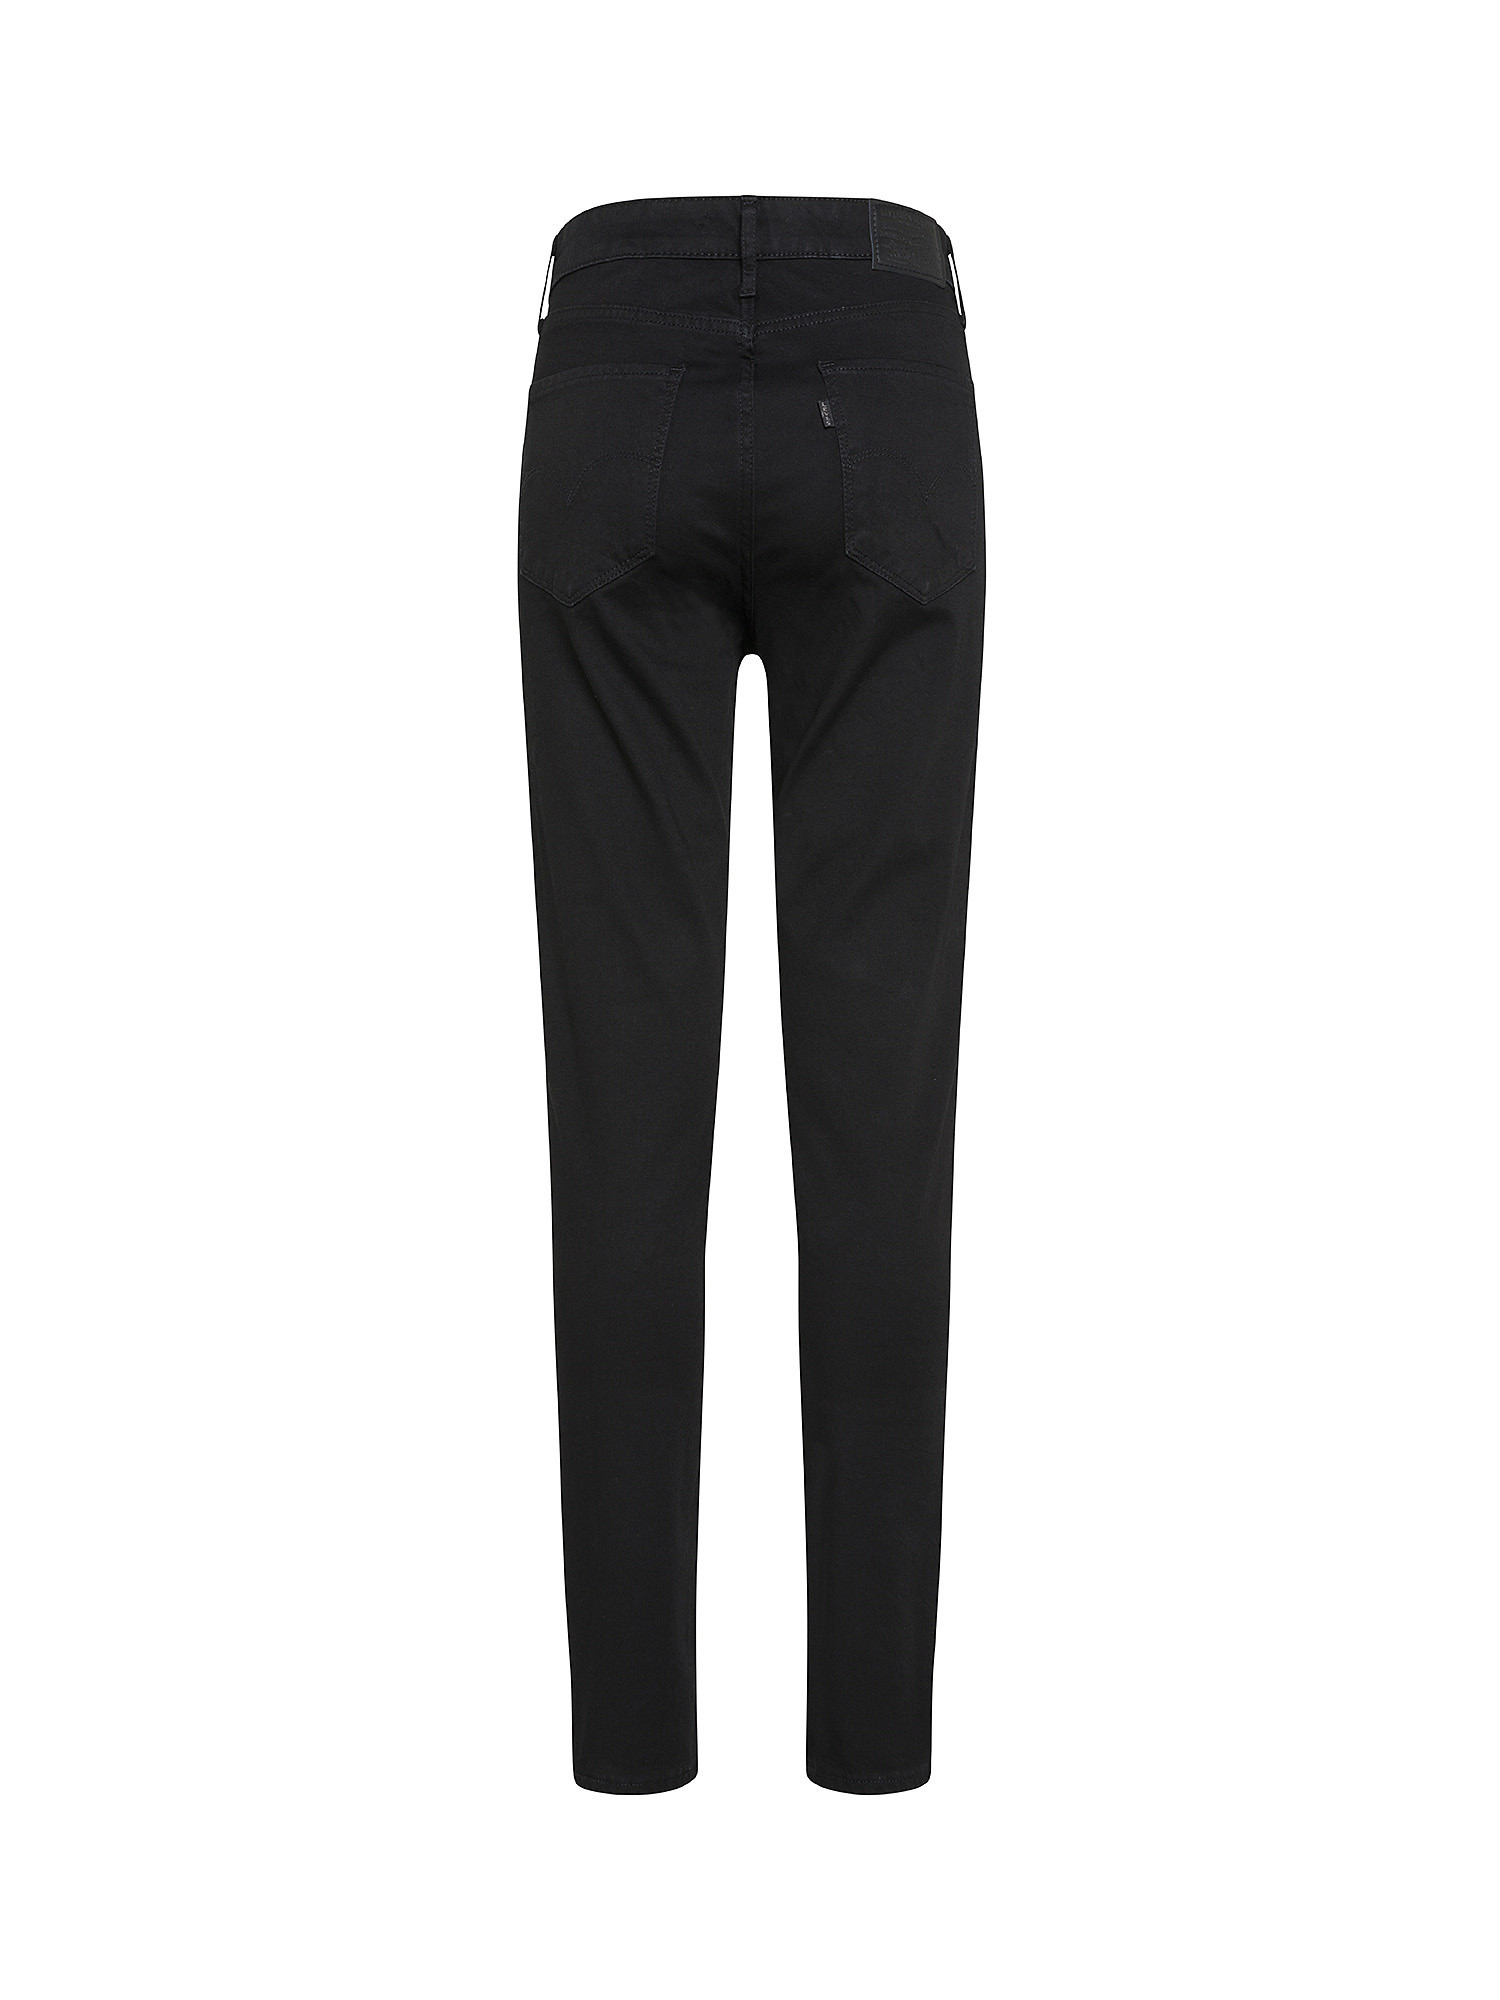 Levi's - 721™ skinny high rise jeans, Black, large image number 1